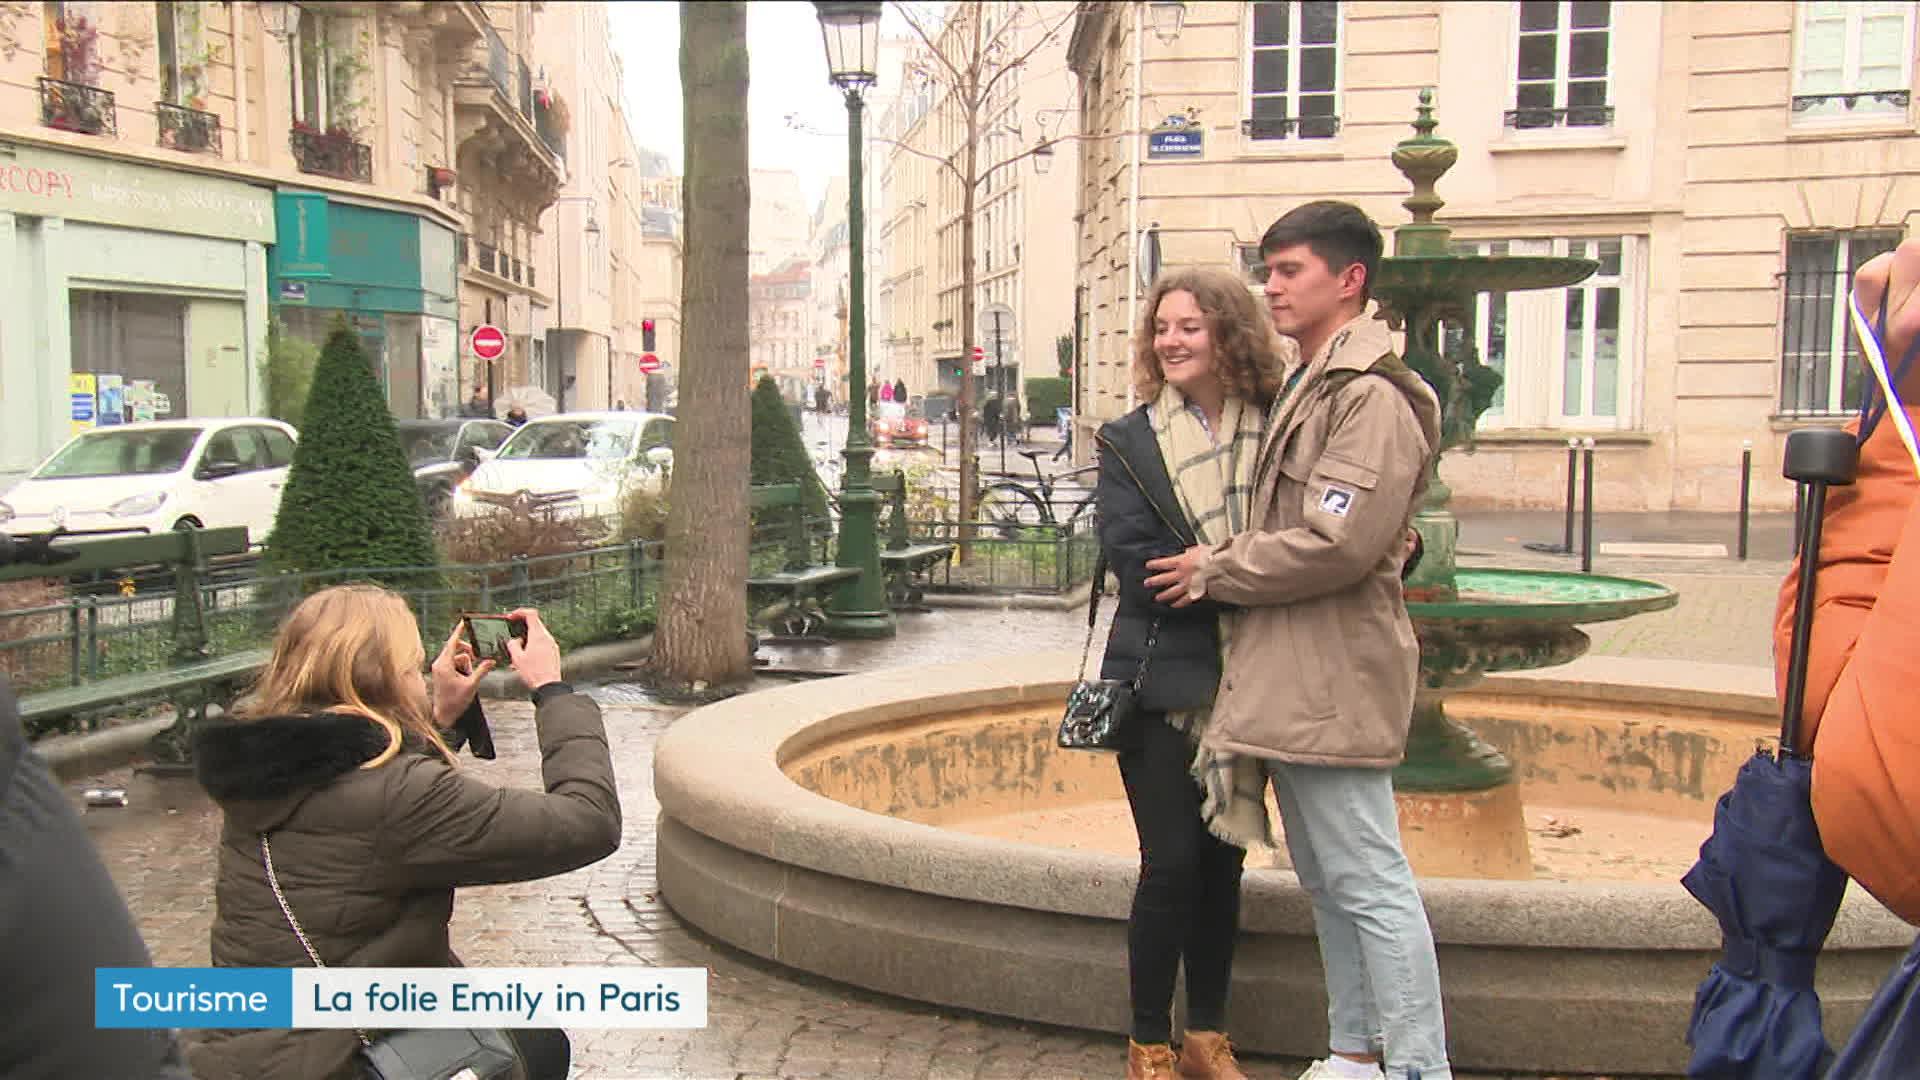 La folie Emily in Paris